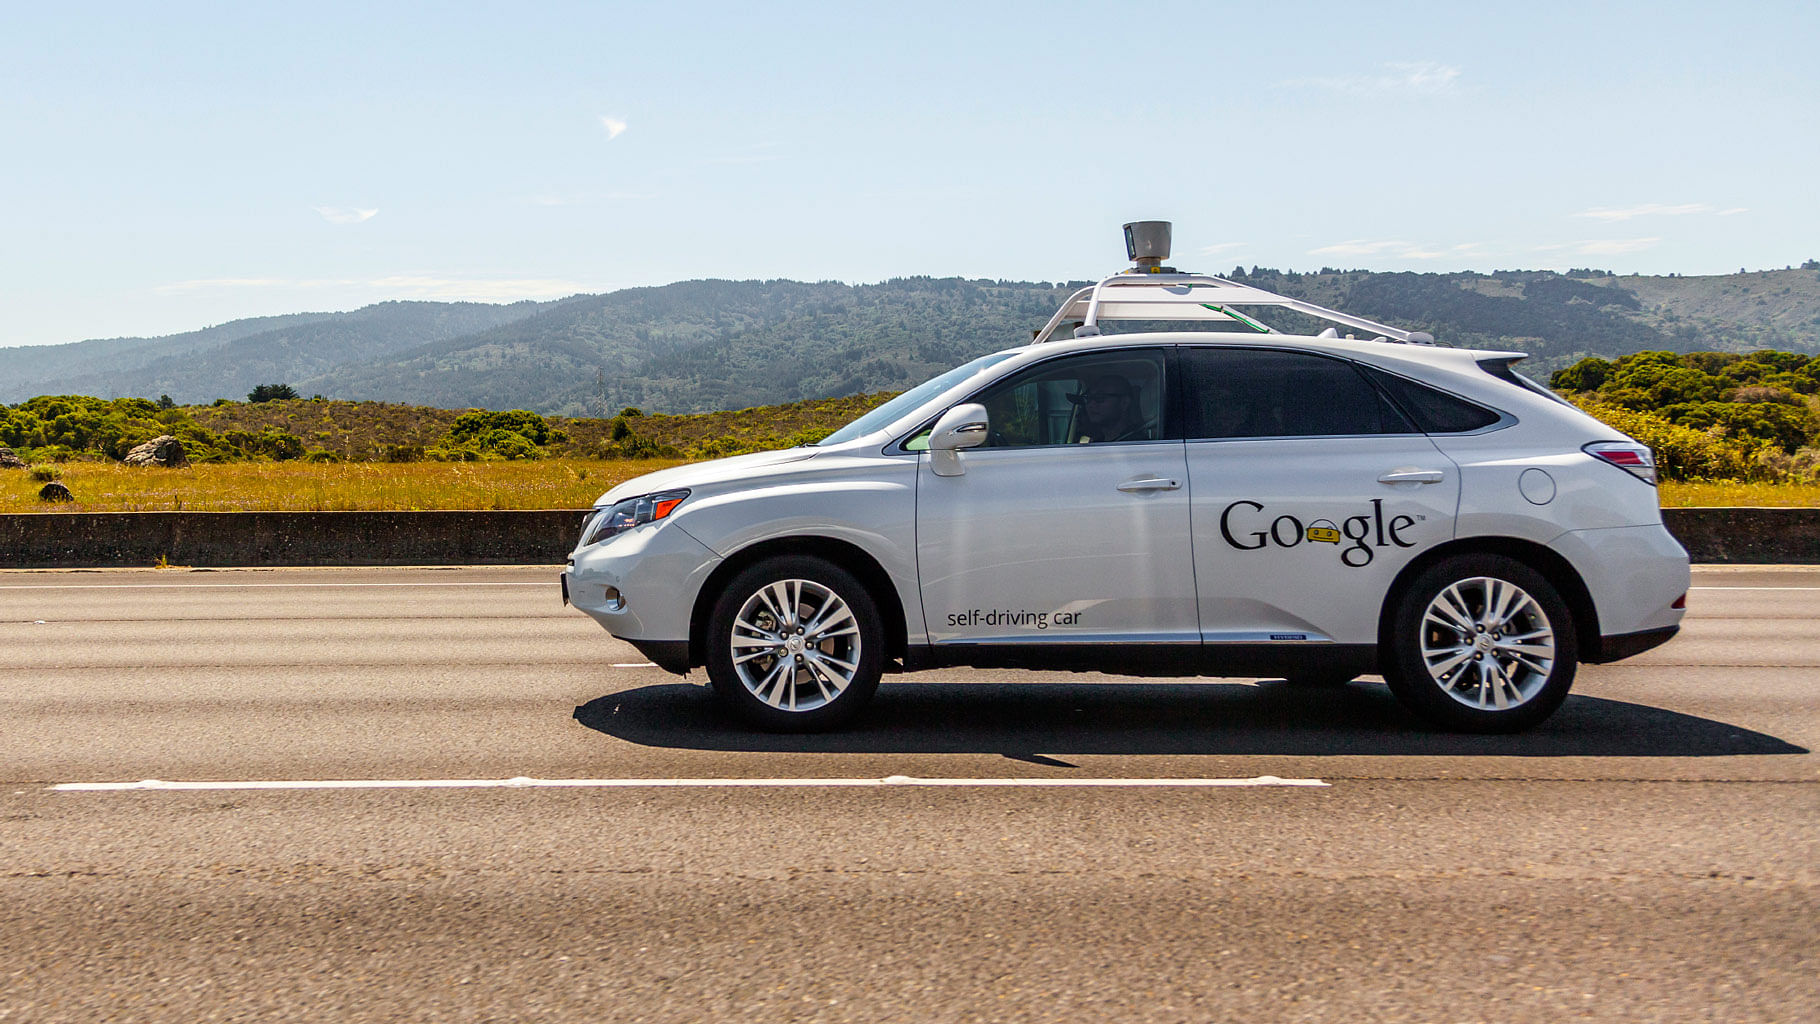  Google’s self-driving car. (Photo: iStockphoto)